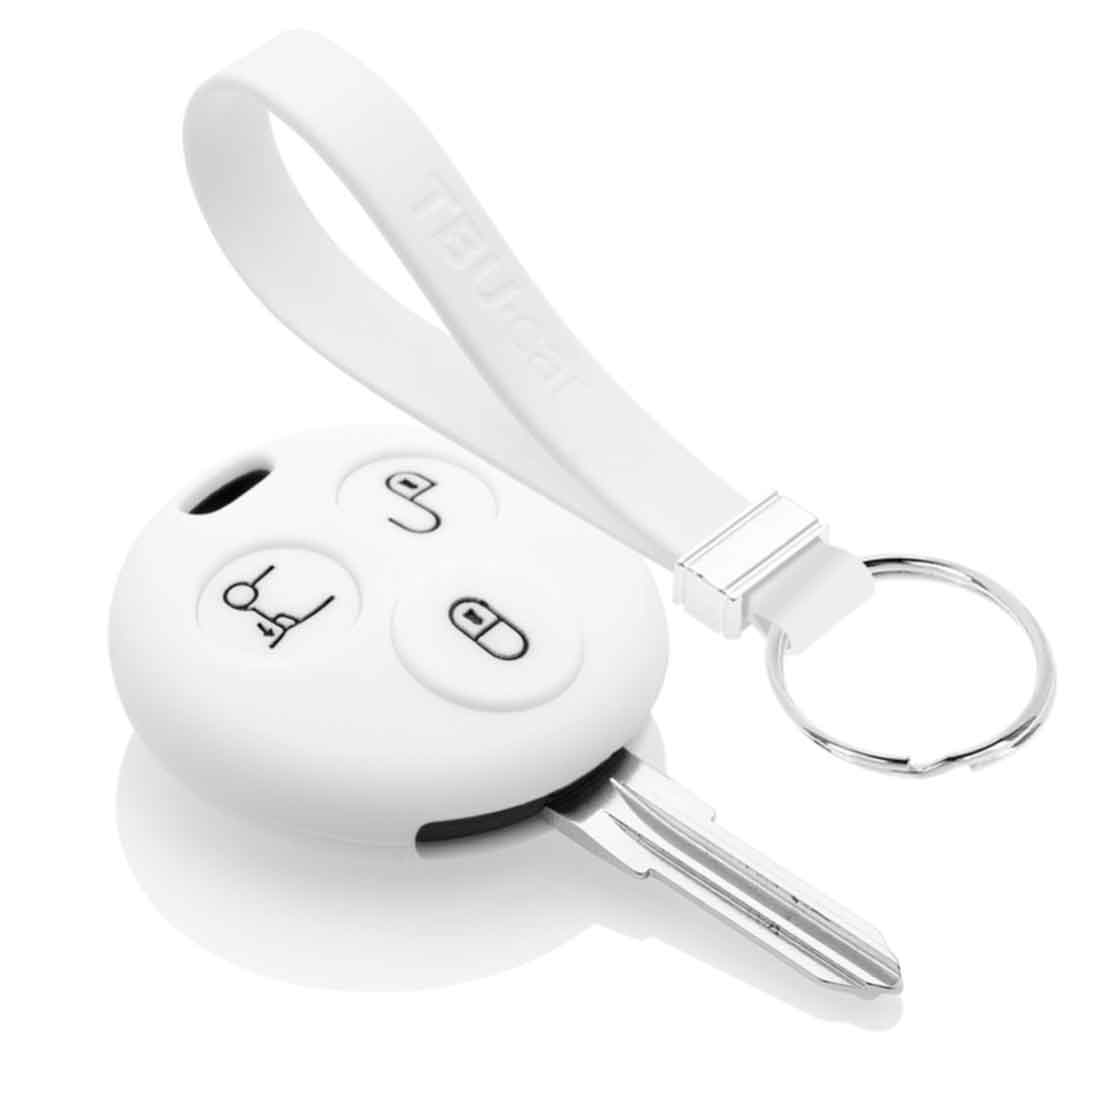 TBU car TBU car Car key cover compatible with Smart - Silicone Protective Remote Key Shell - FOB Case Cover - White